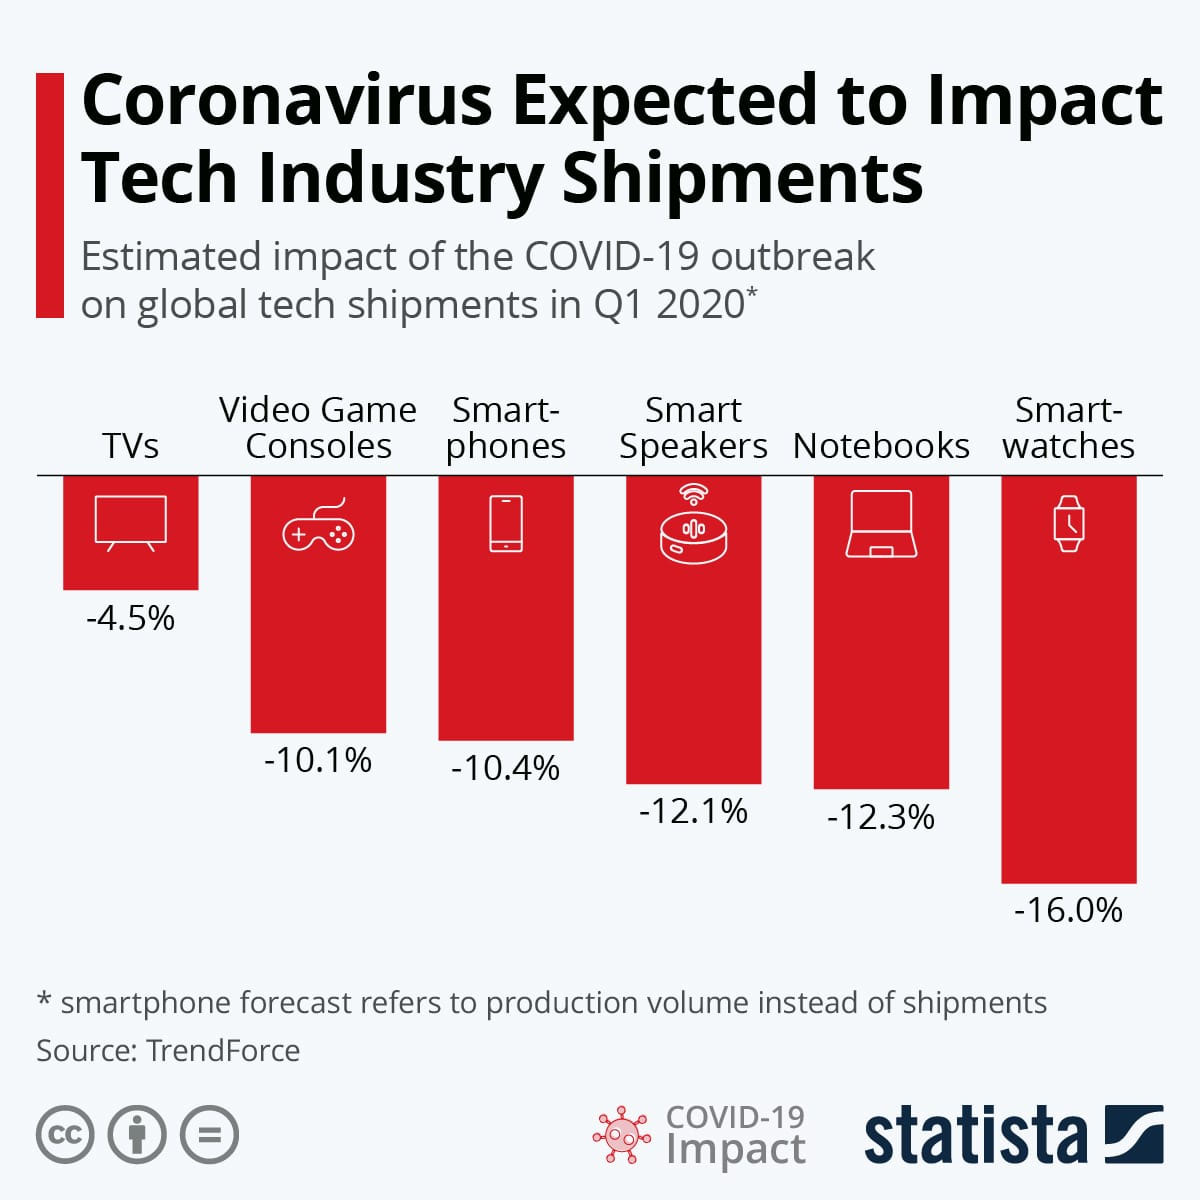 Impact Of Coronavirus On Technology Industry Shipment